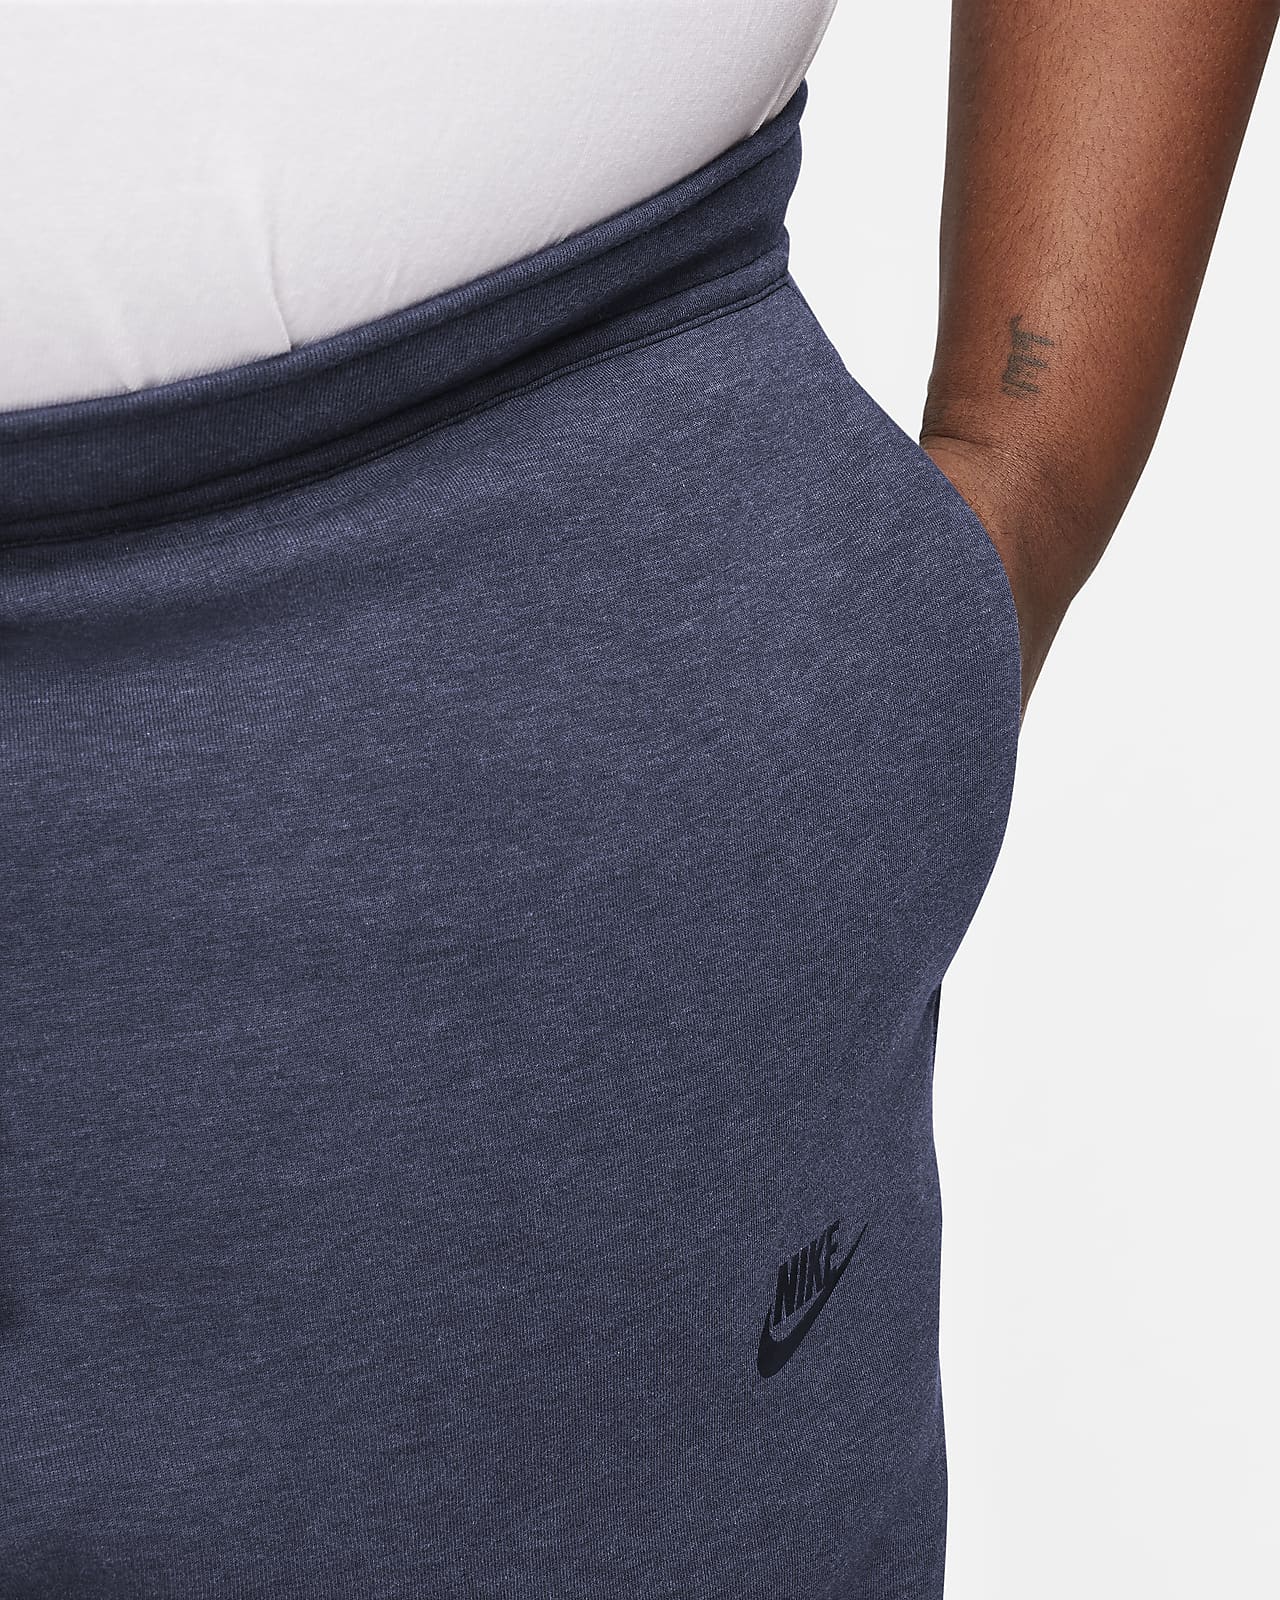 Nike Tear away Athletic Pants Black Women's Sz Small NEW w/ TAGS